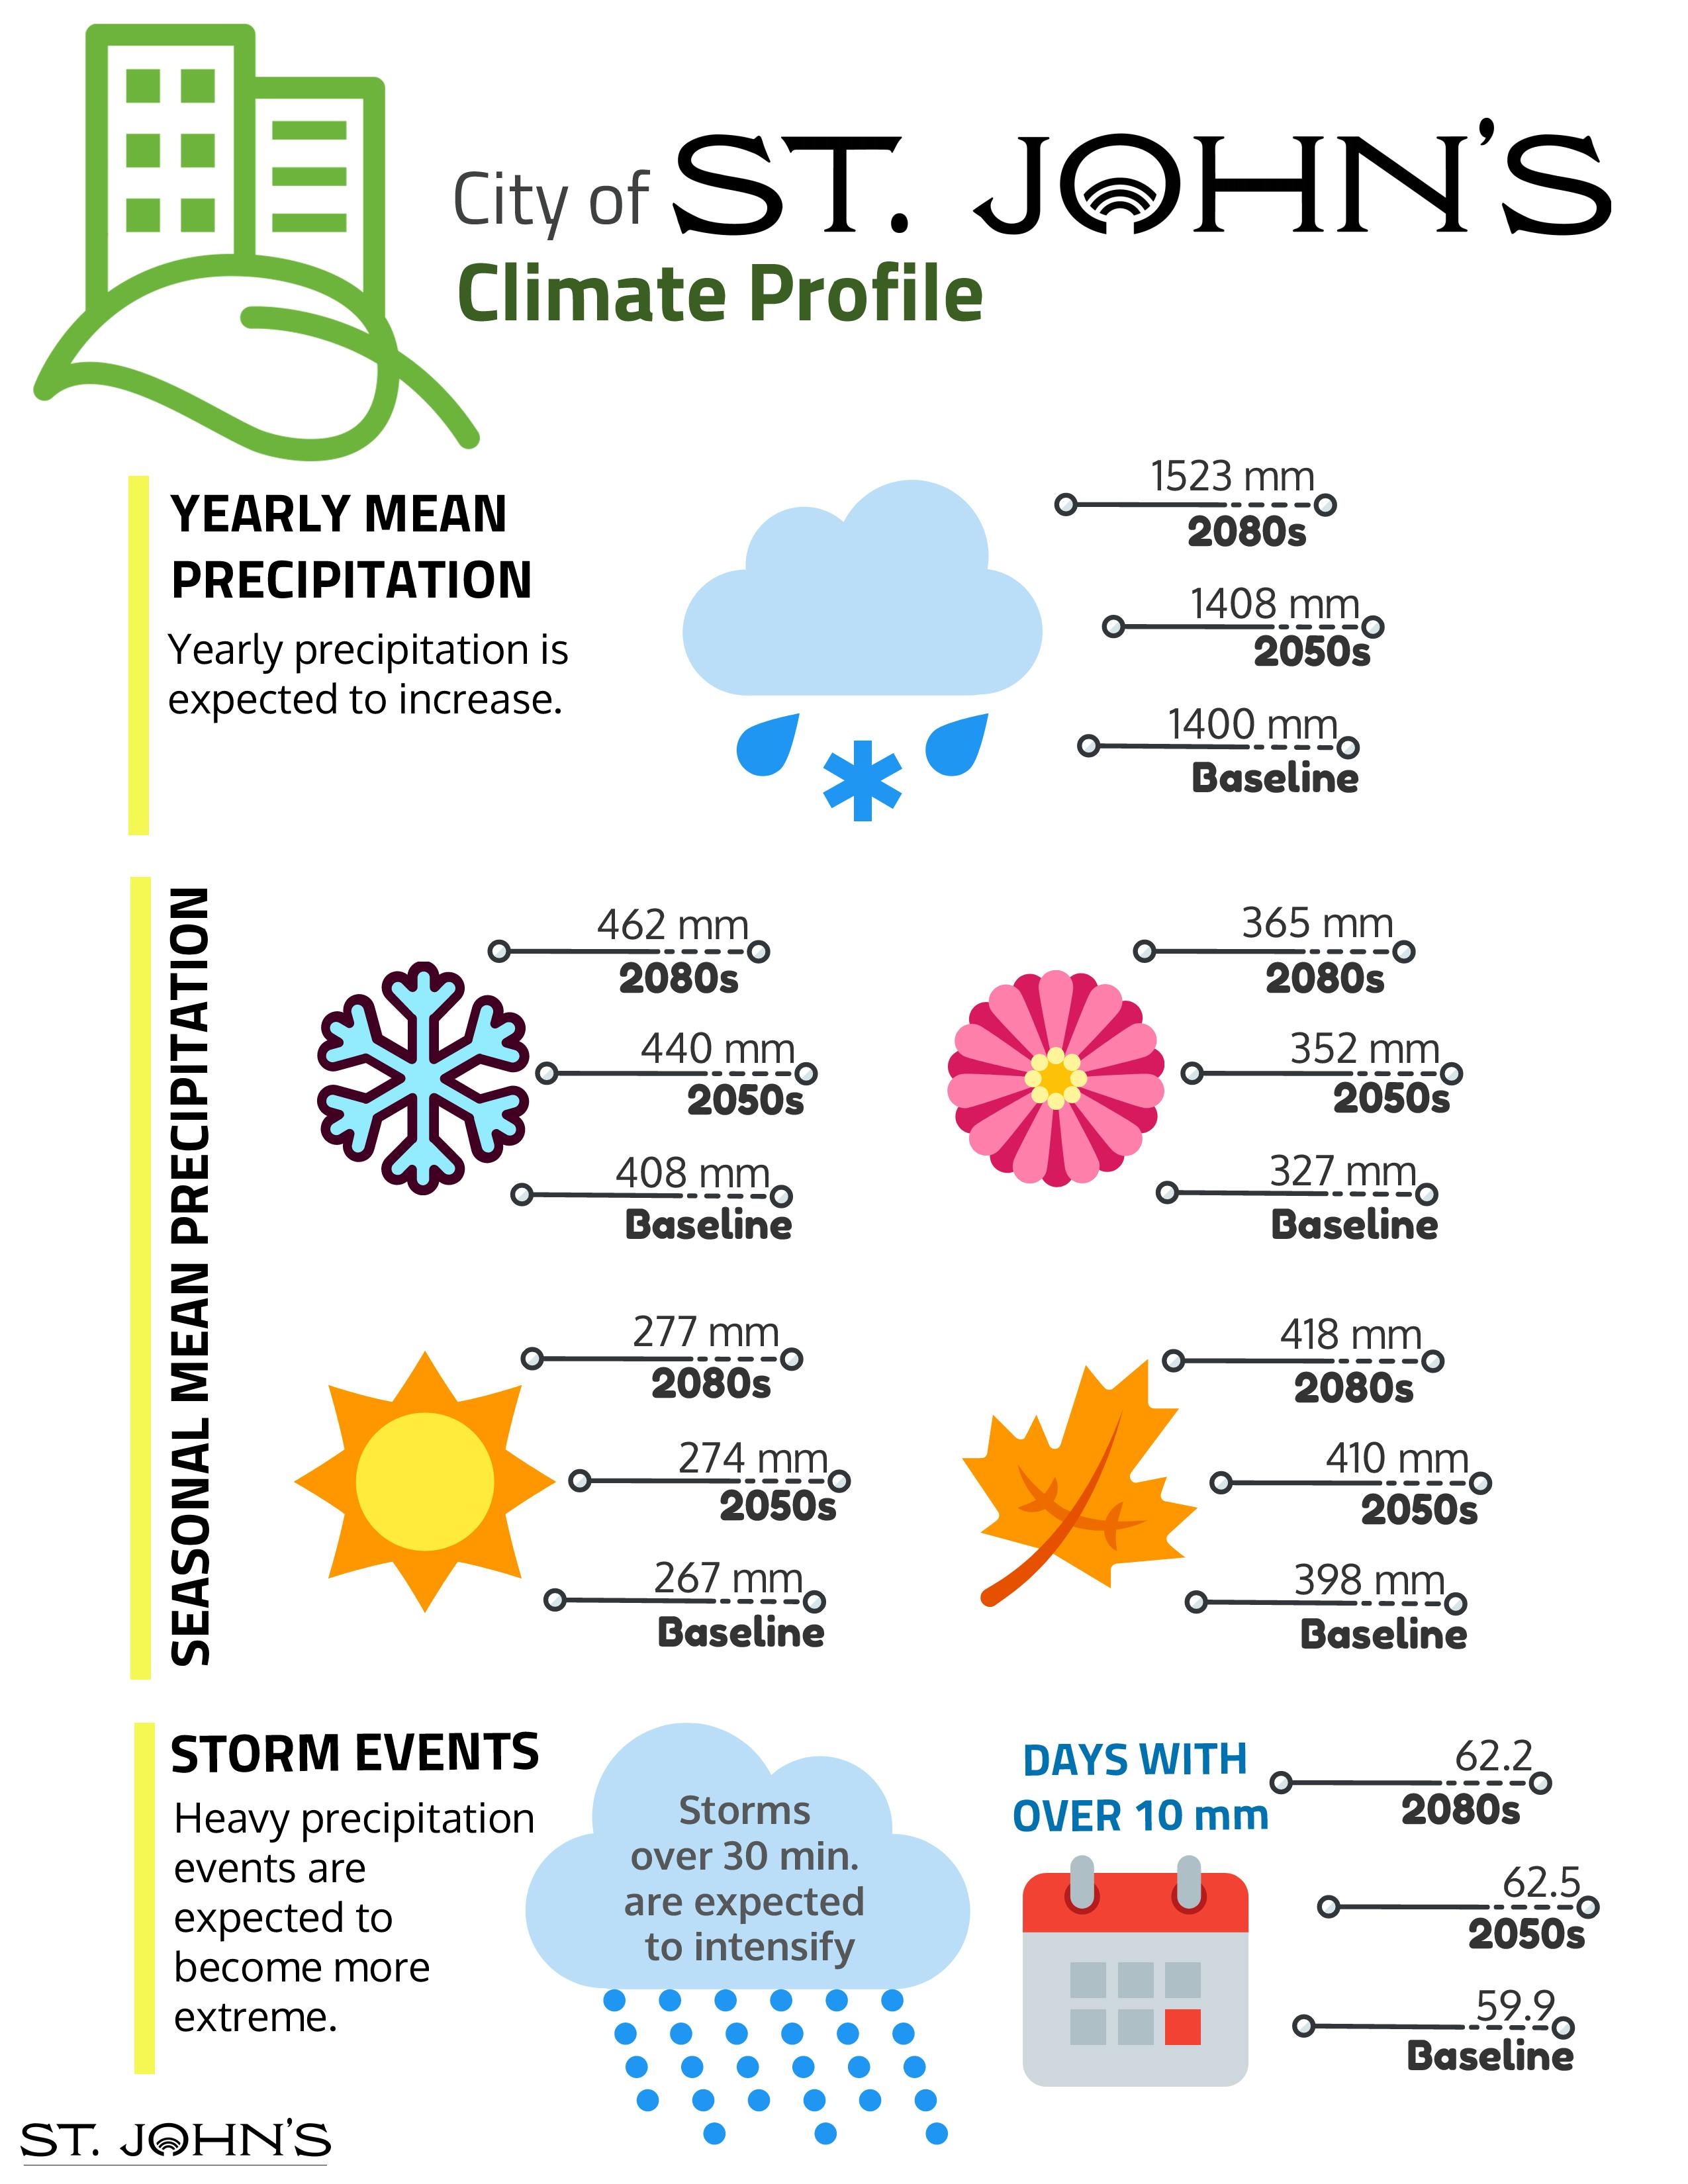 St. John's Climate Profile - Precipitation